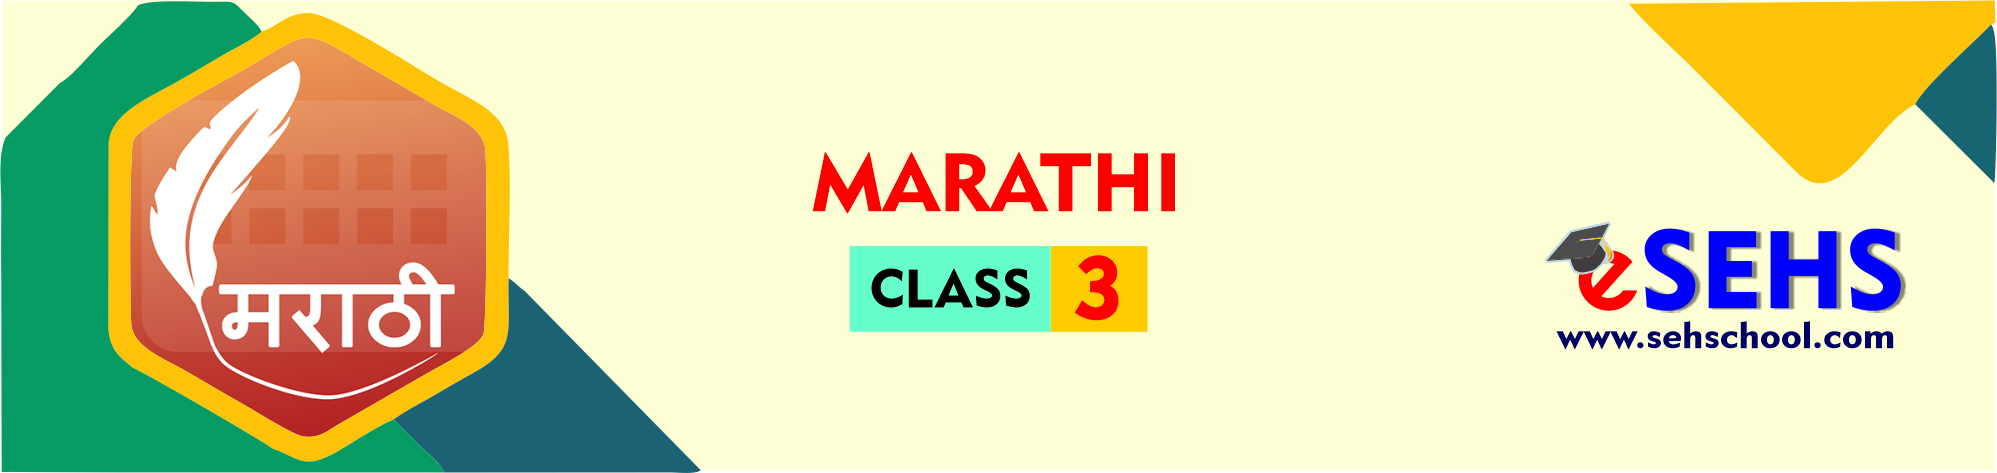 3rd marathi banner